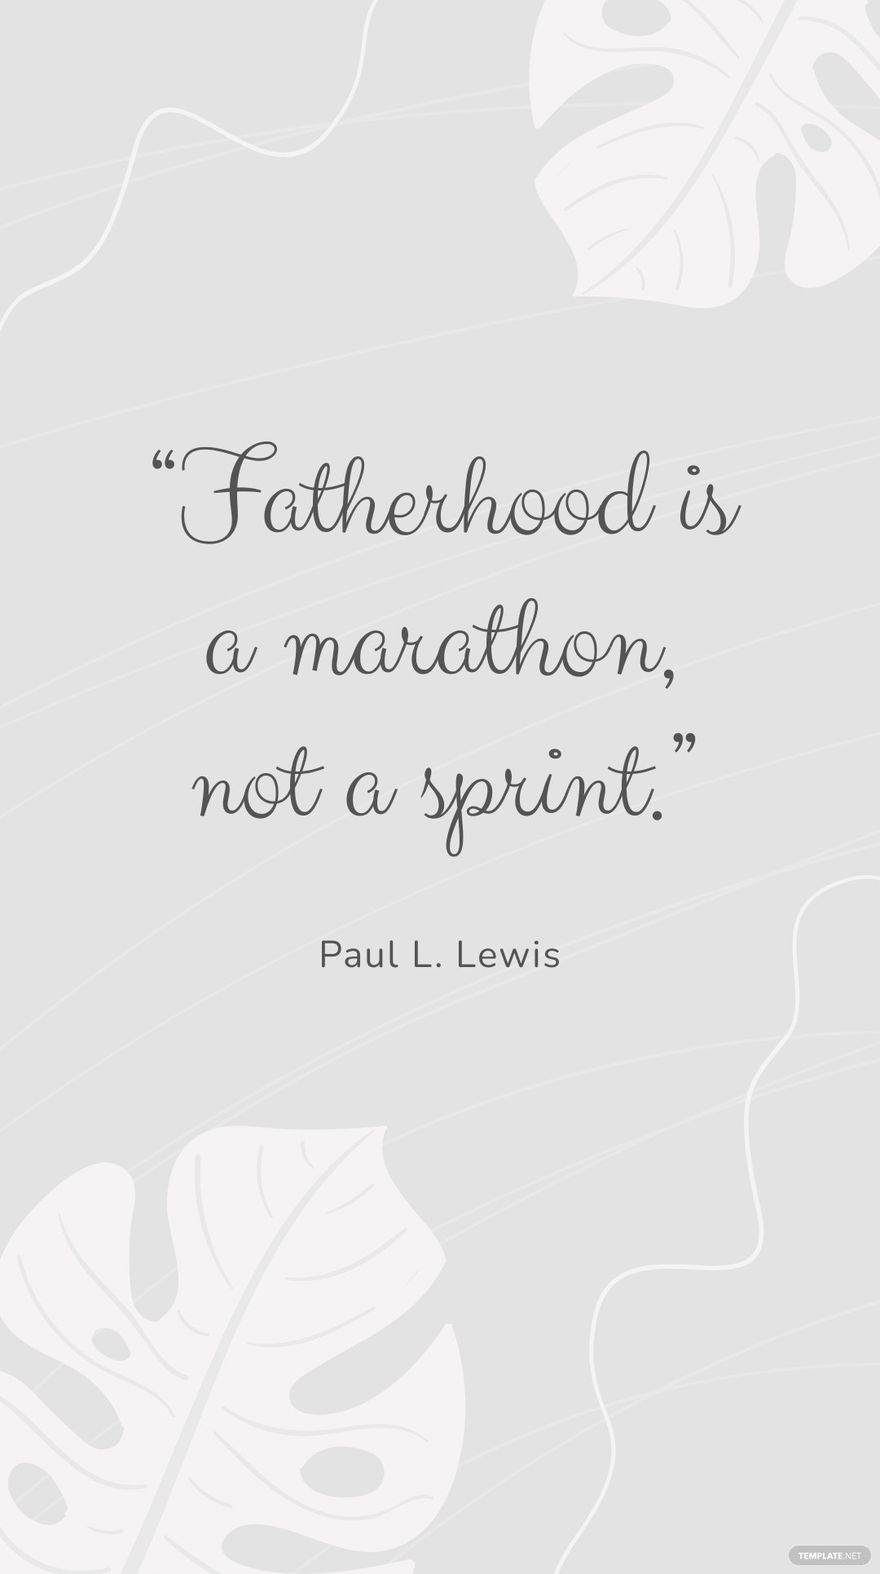 Paul L. Lewis - “Fatherhood is a marathon, not a sprint.”